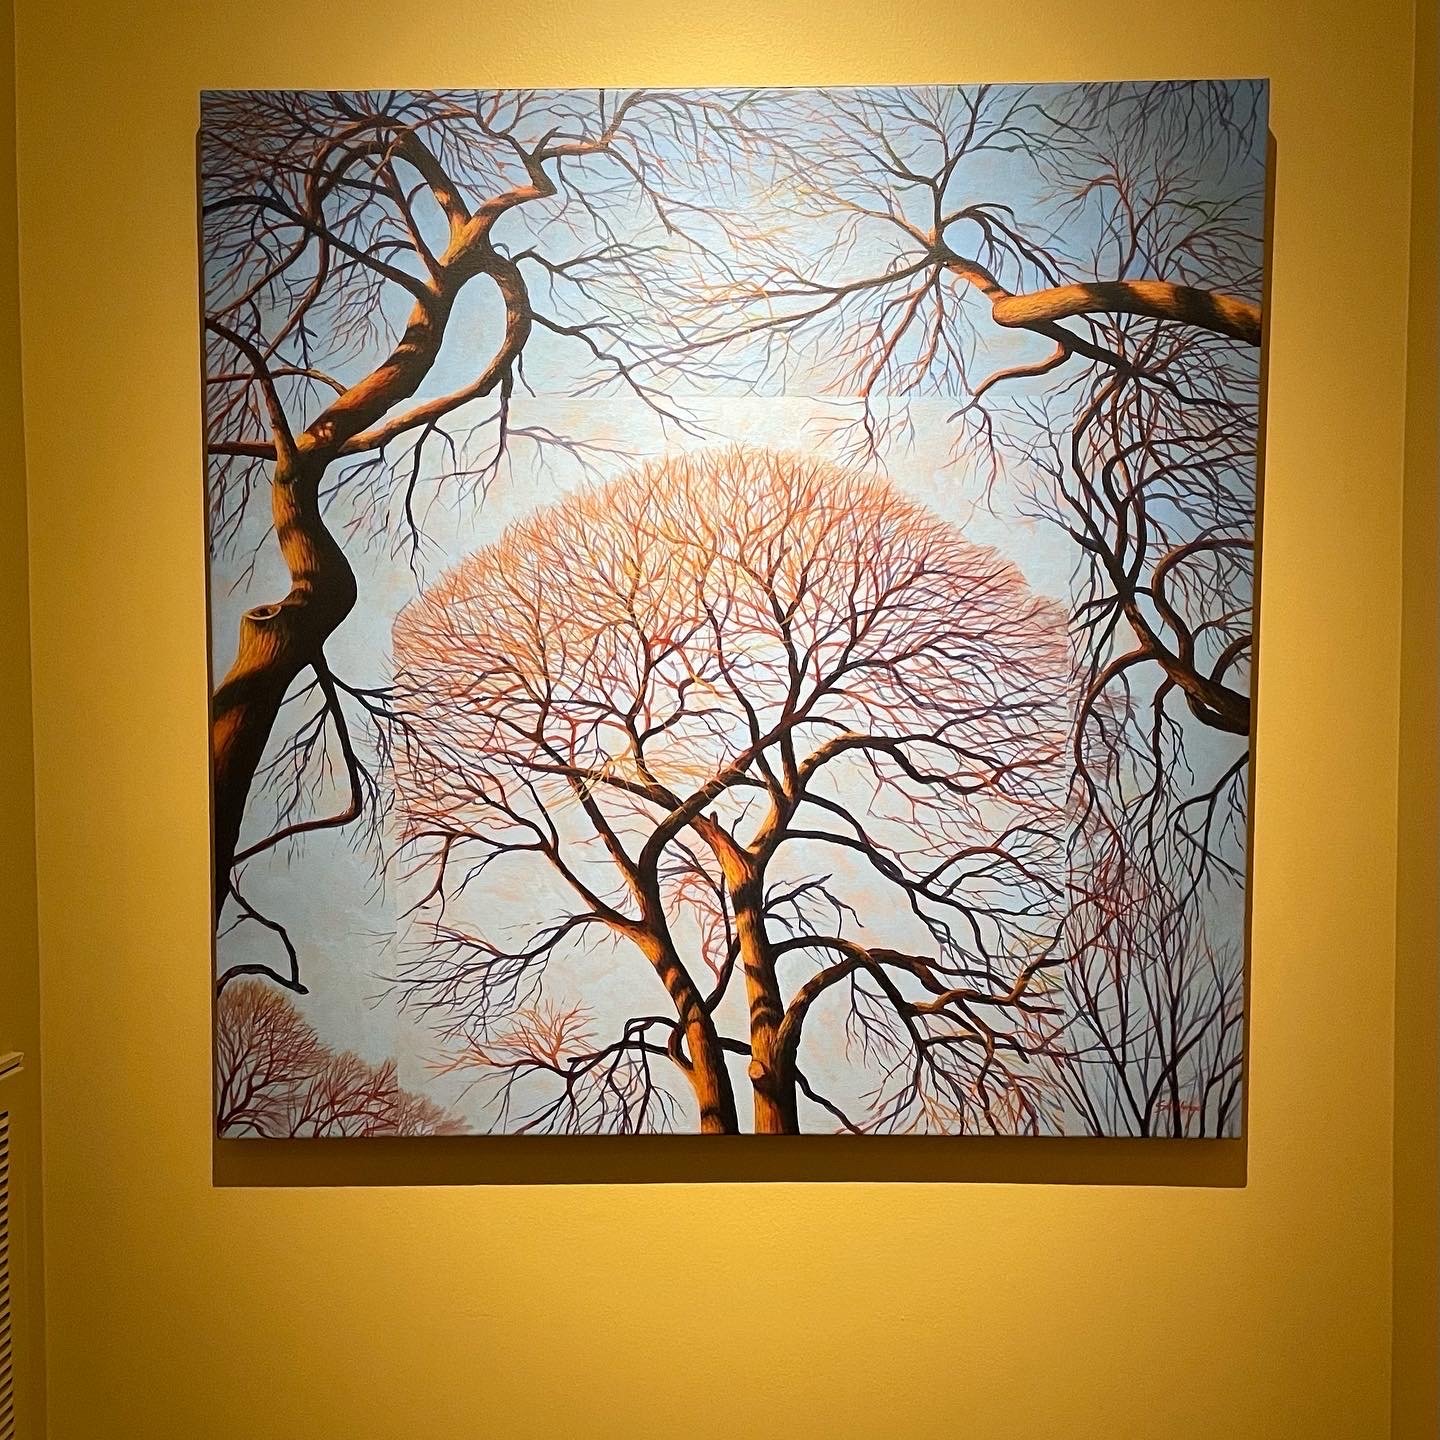    Elms  , 40” x 40”, acrylic on canvas, Kendall Stallings 